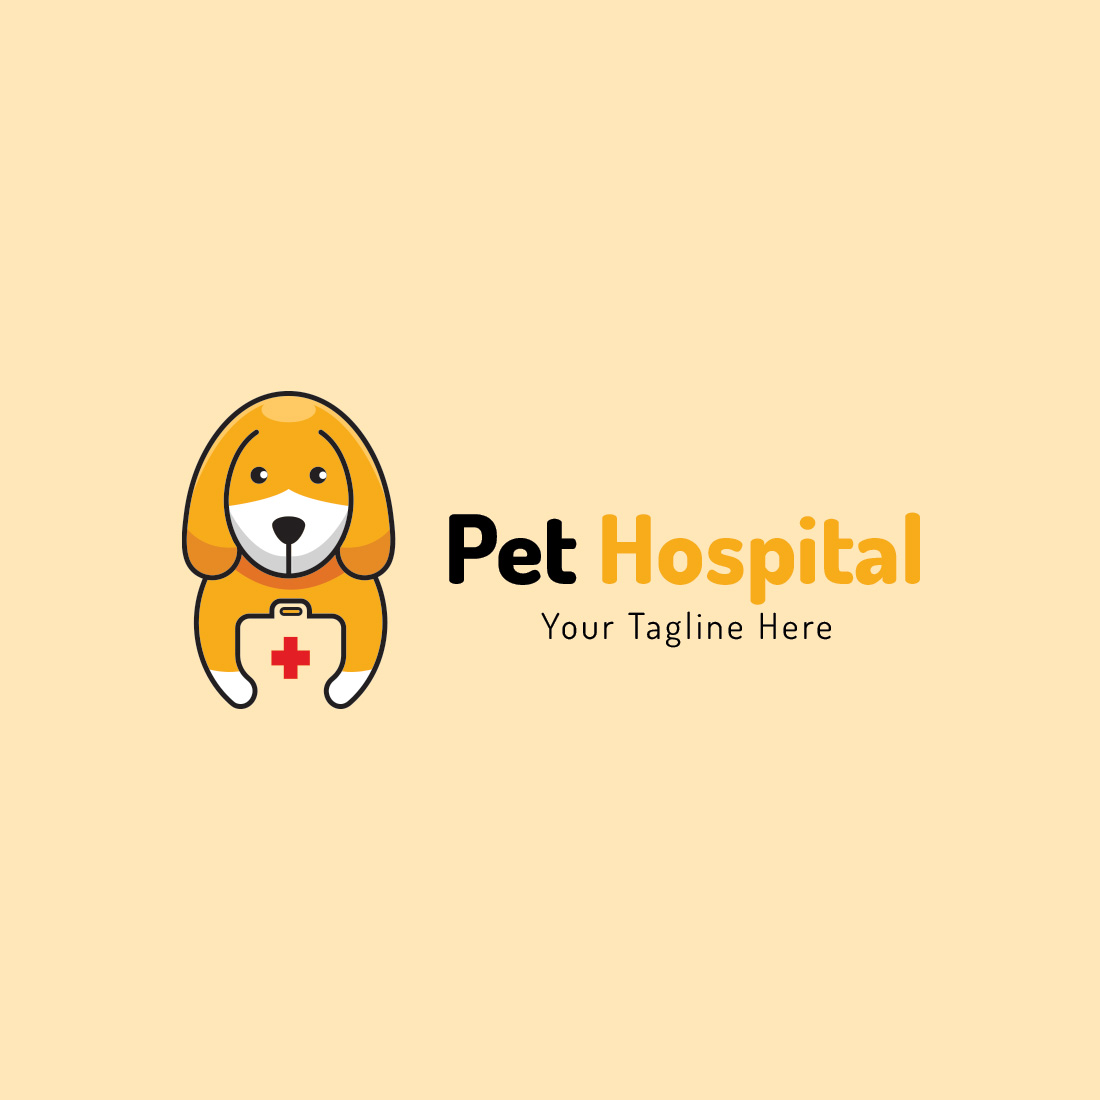 Pet Doctor Logo Design Template cover image.